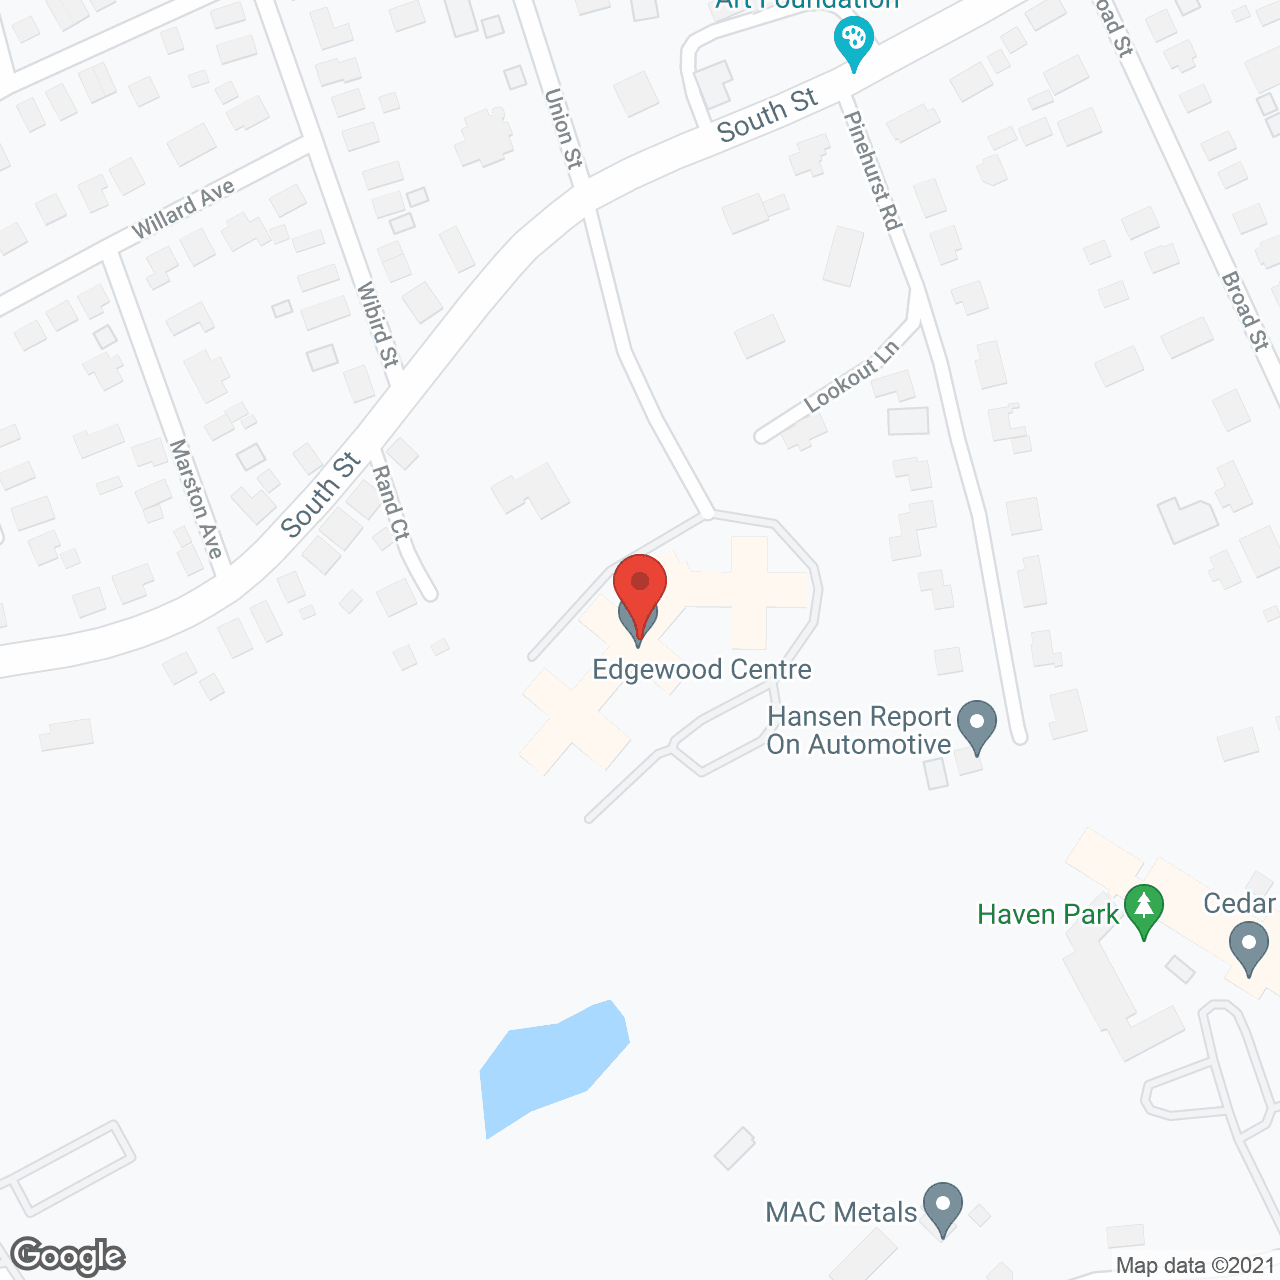 Edgewood Centre in google map